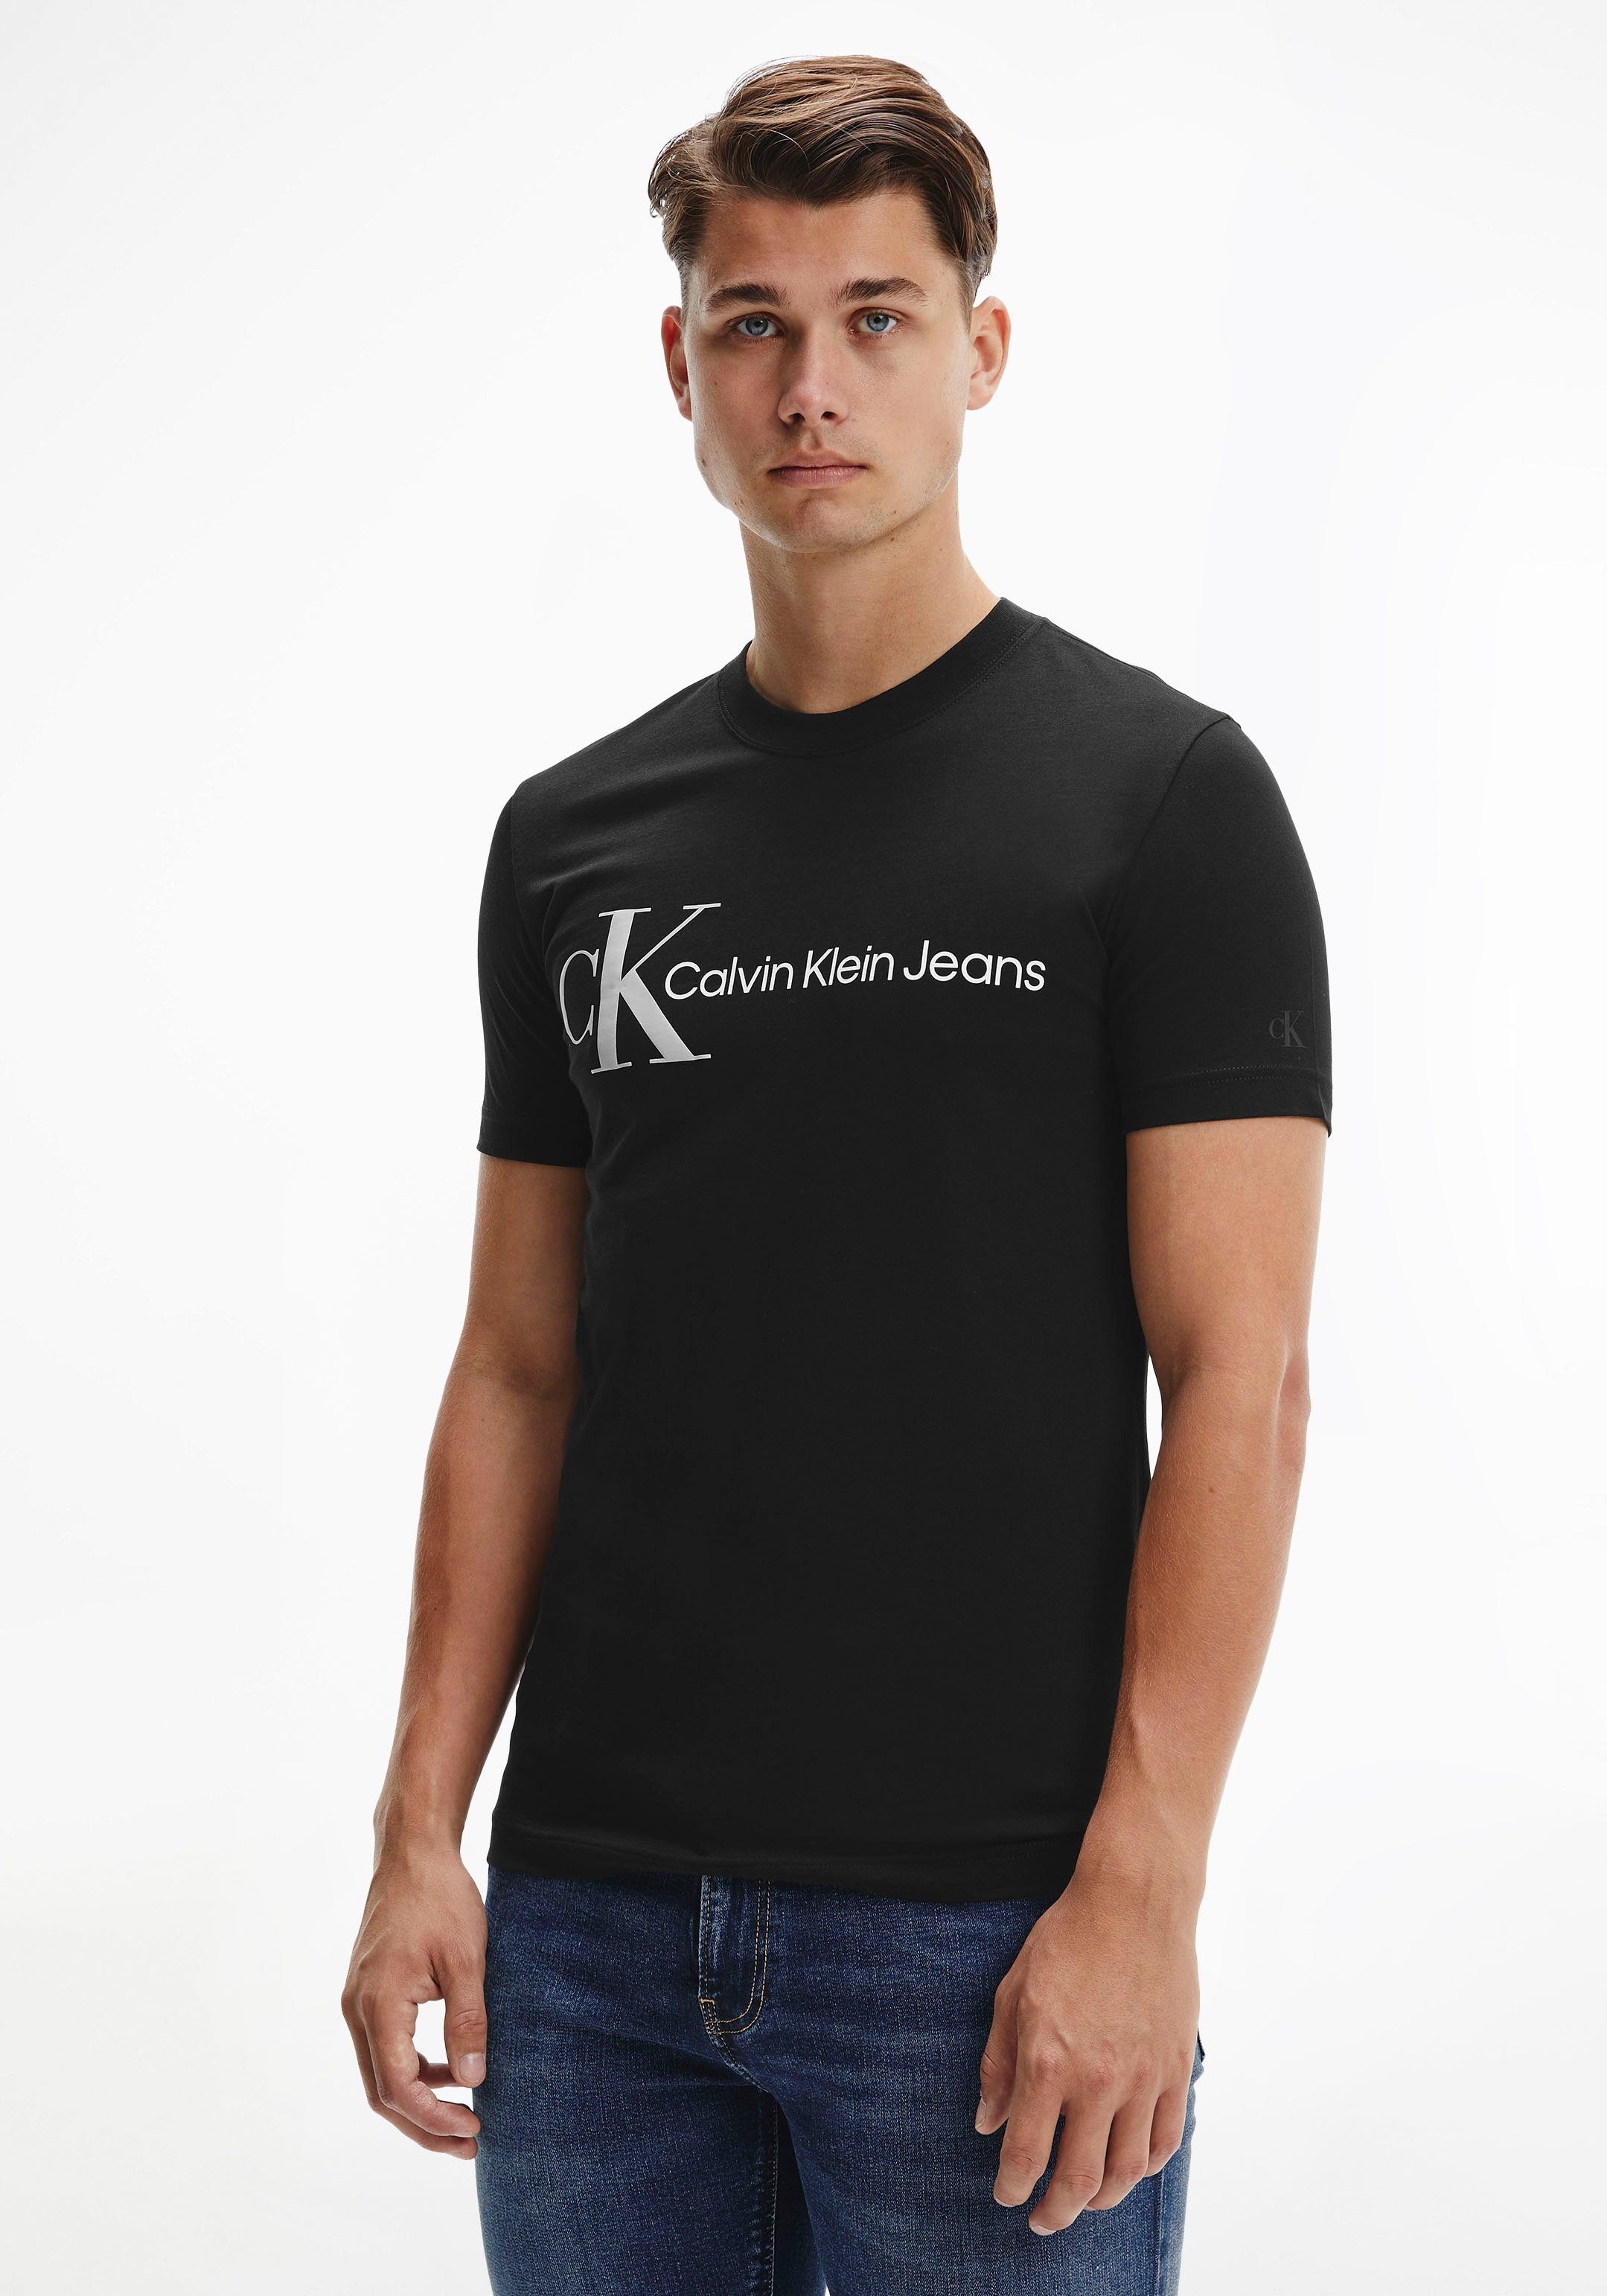 Jeans GRAPHIC Klein T-Shirt Calvin URBAN CK TEE